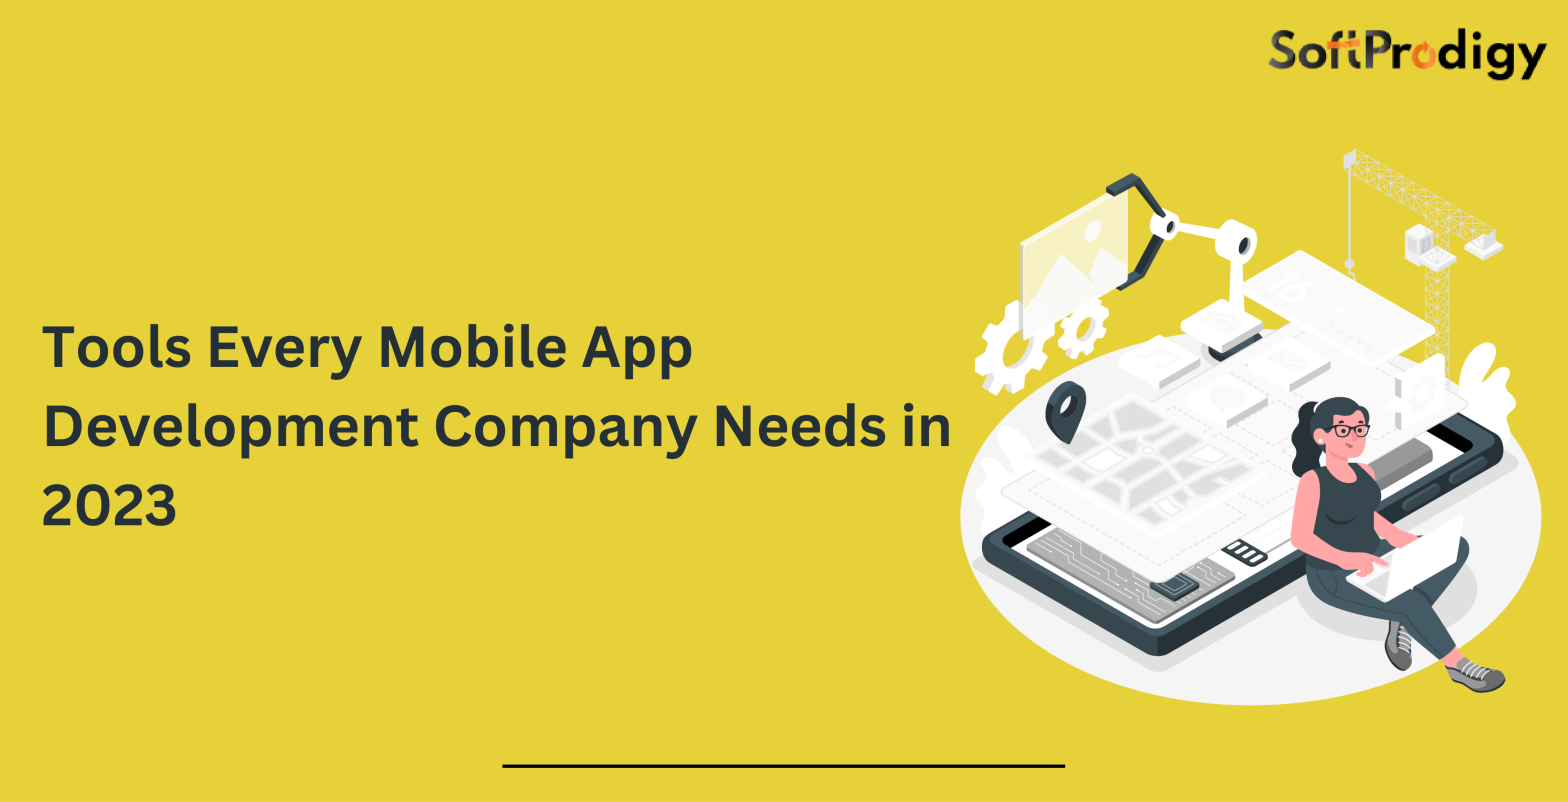 Mobile App Development Tools